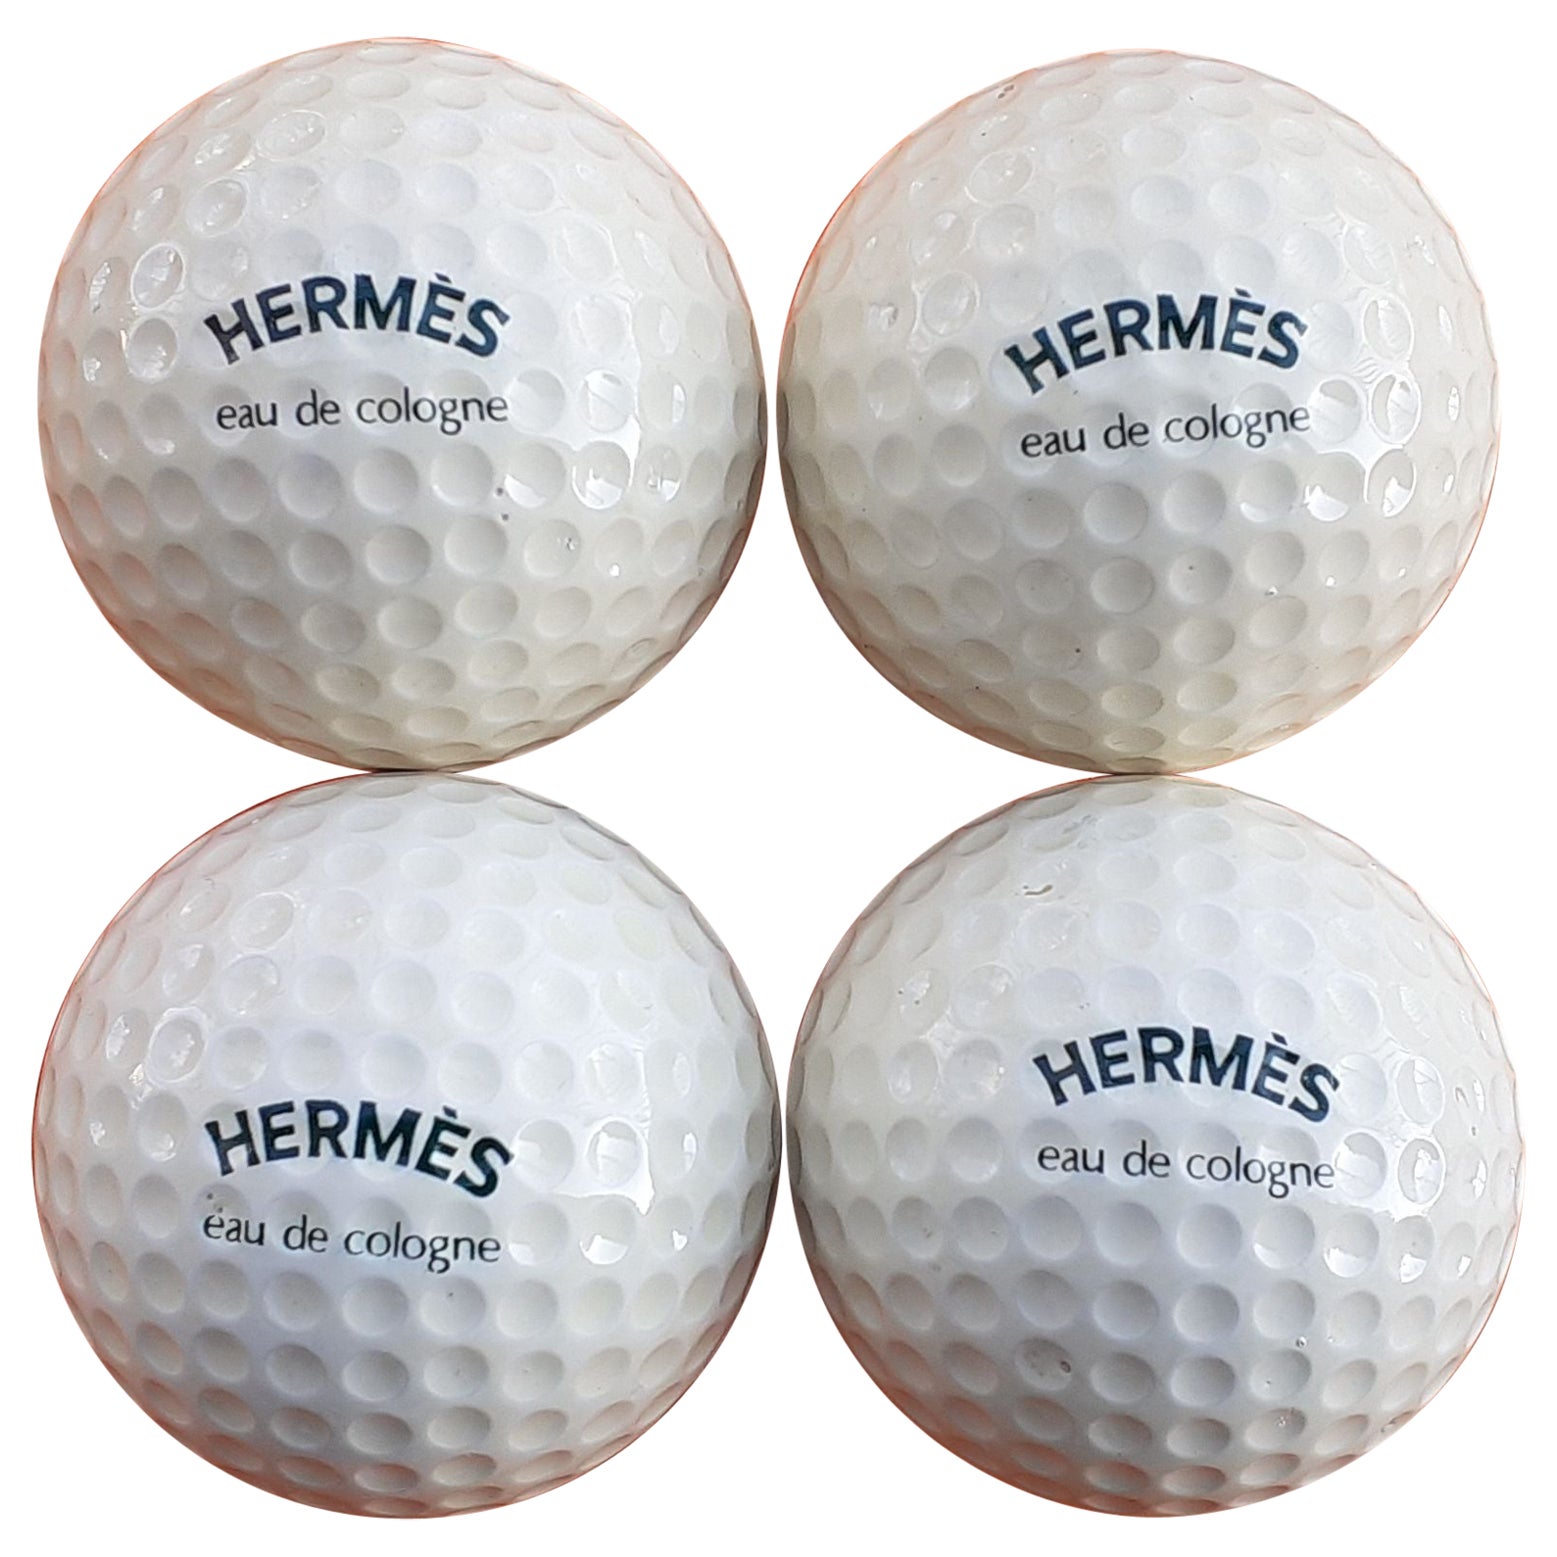 Rare Hermès Set of 4 Golf Balls